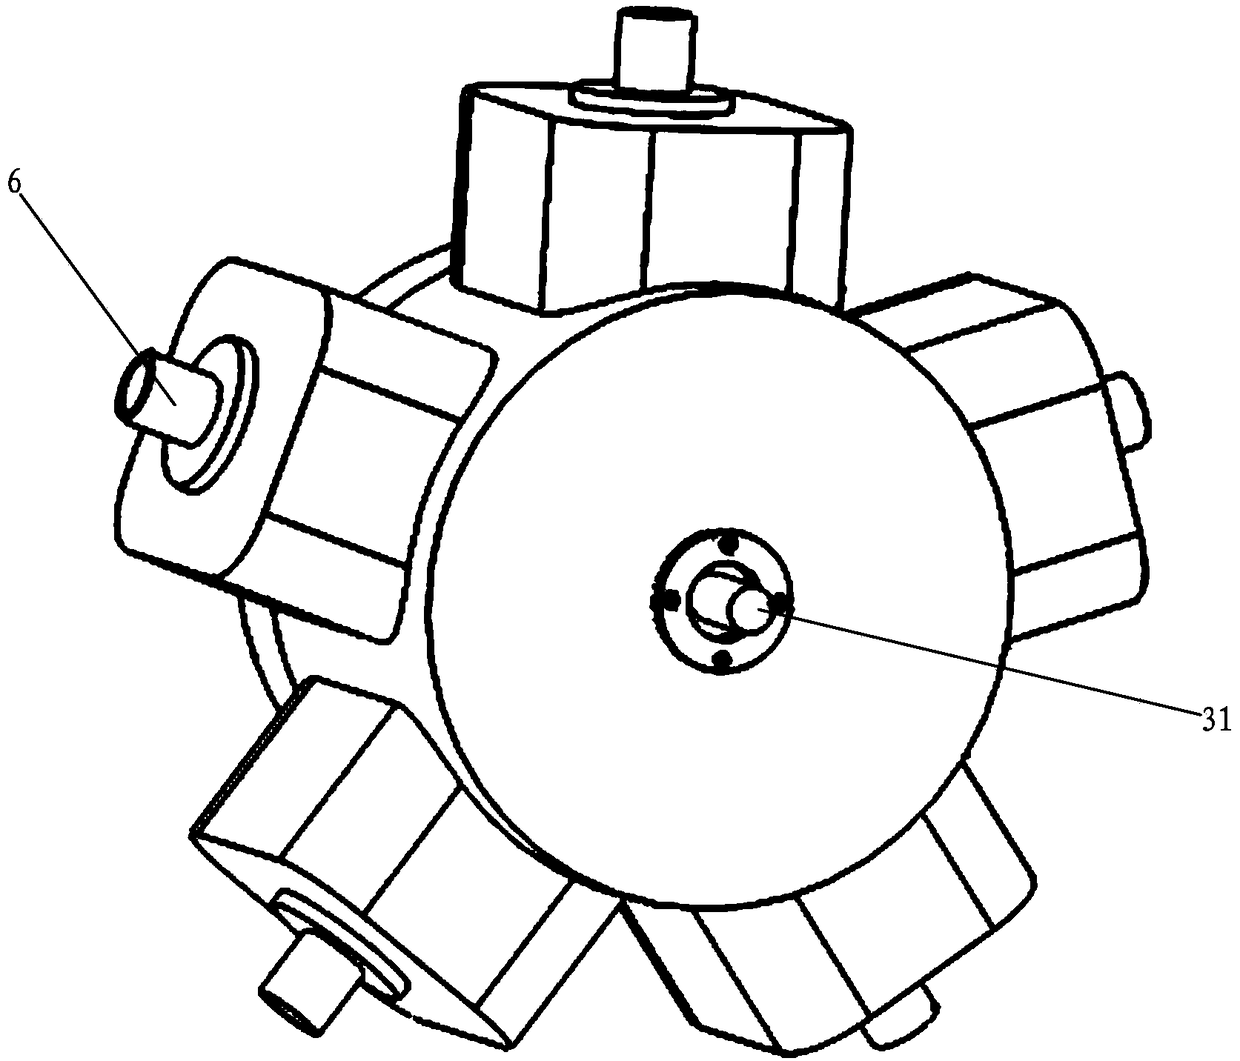 Multi-way rotor control valve